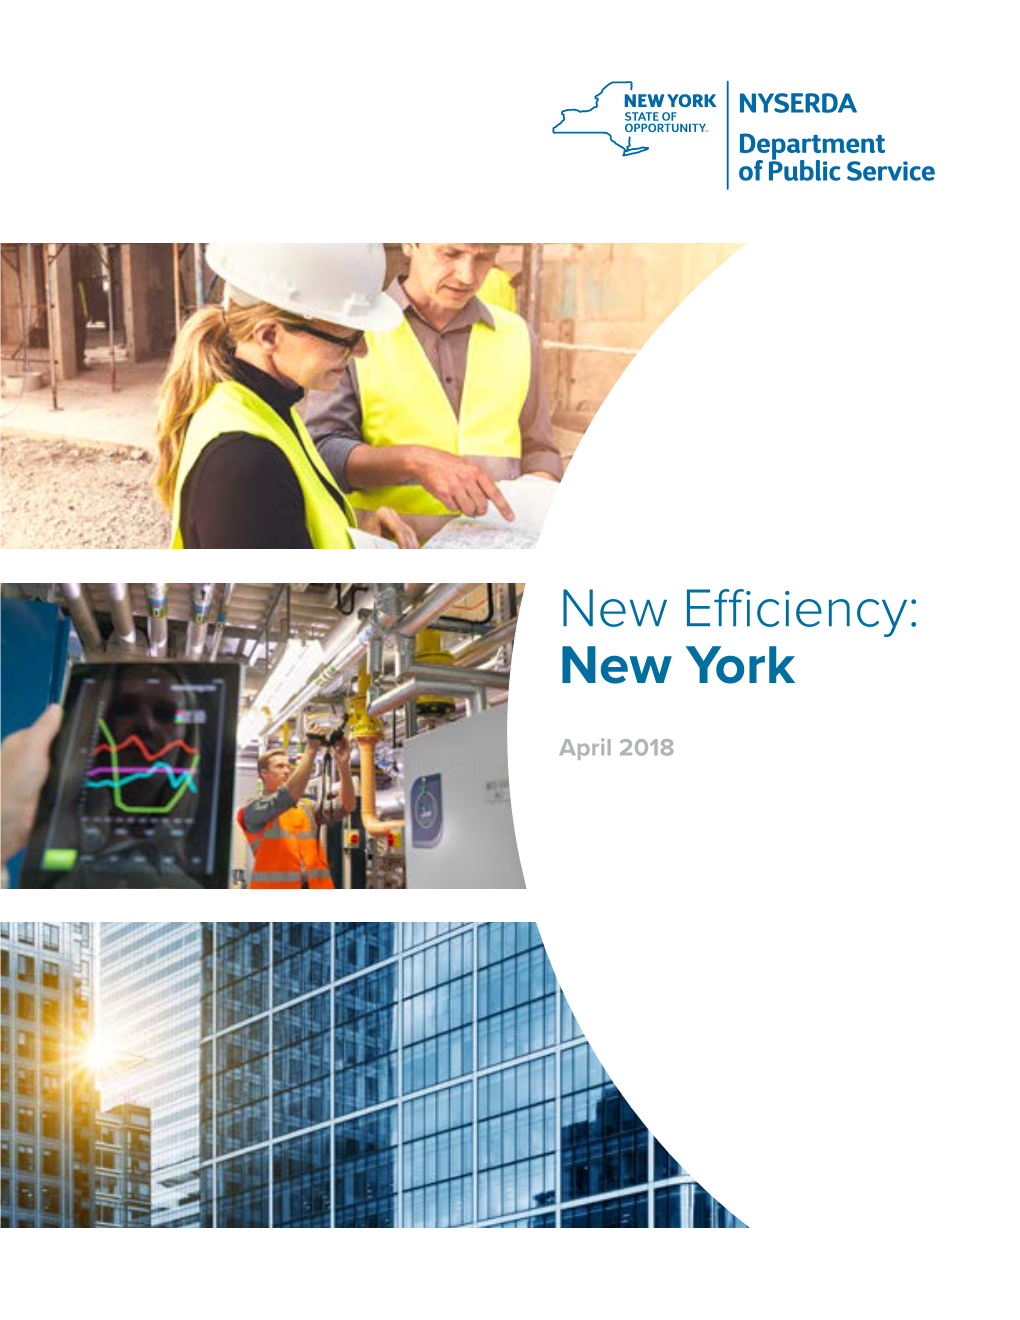 New Efficiency: New York